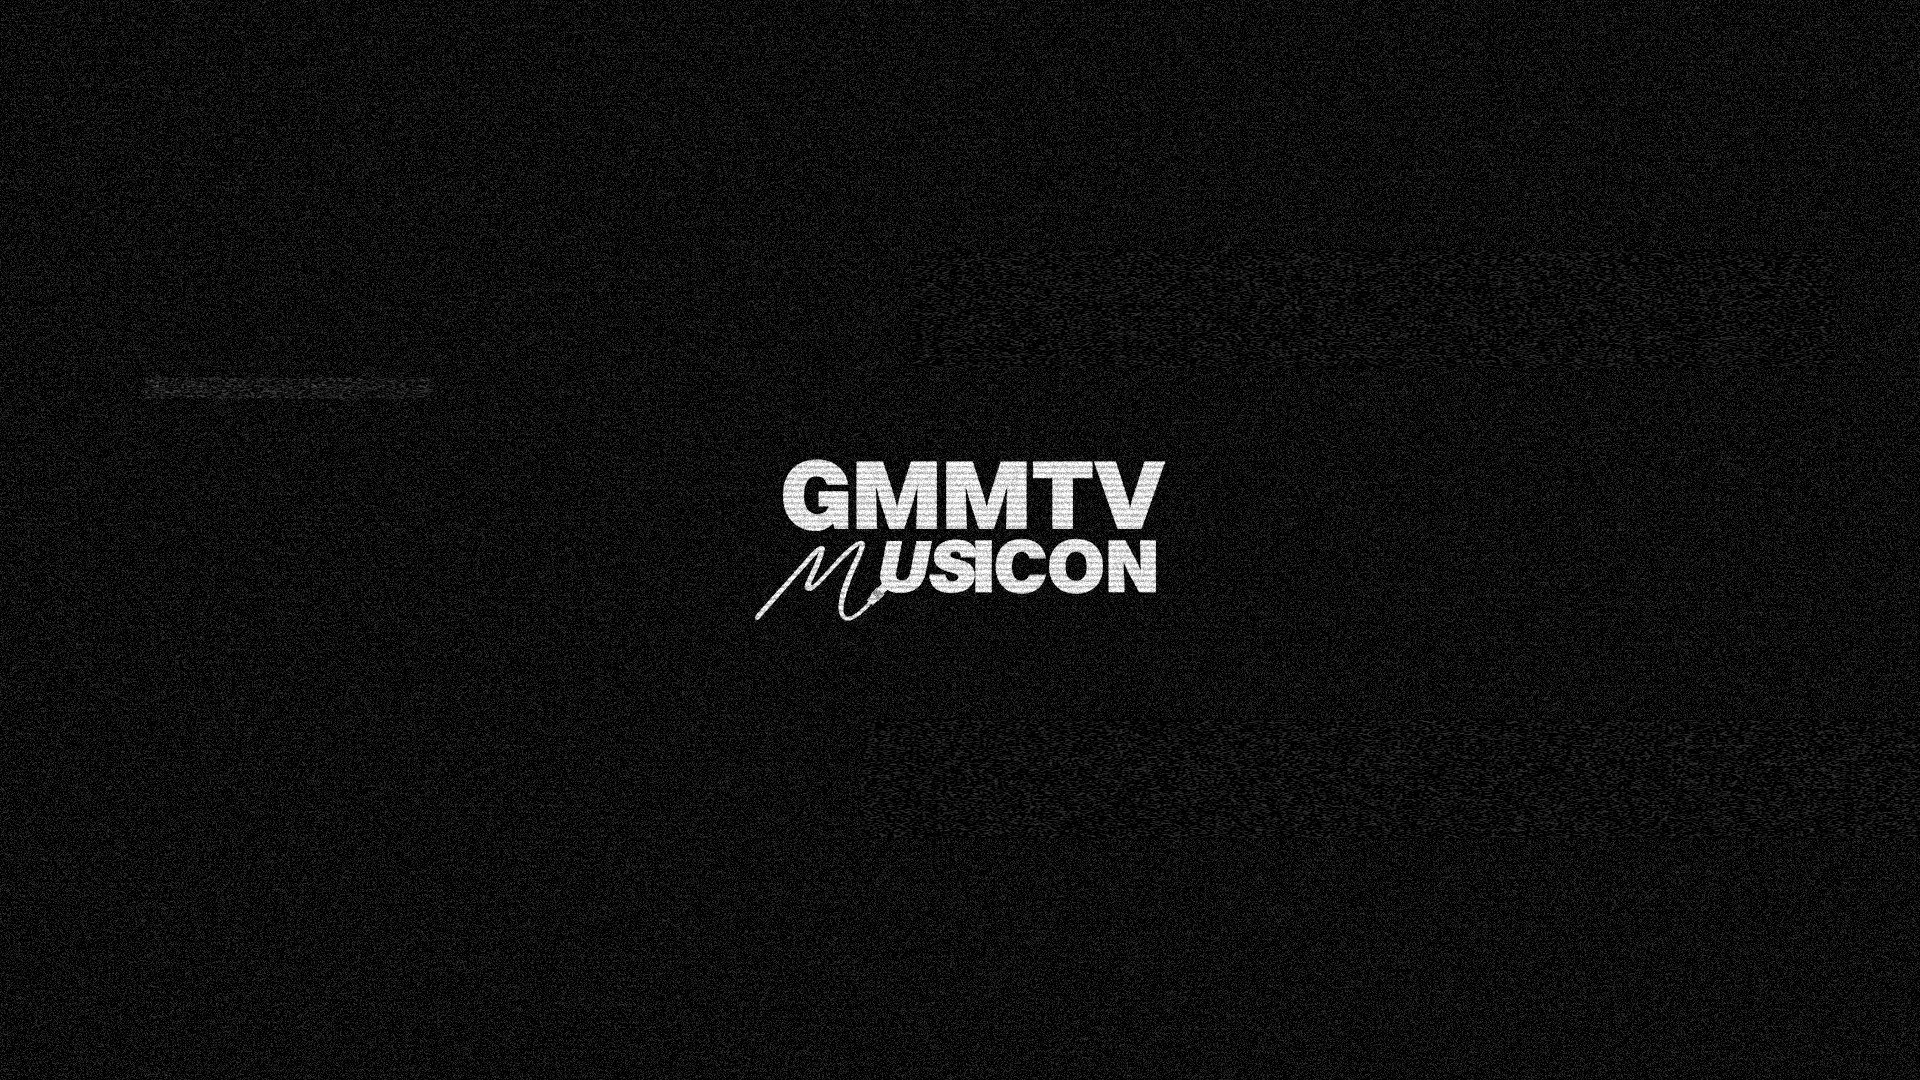 @GMMTV's video Tweet